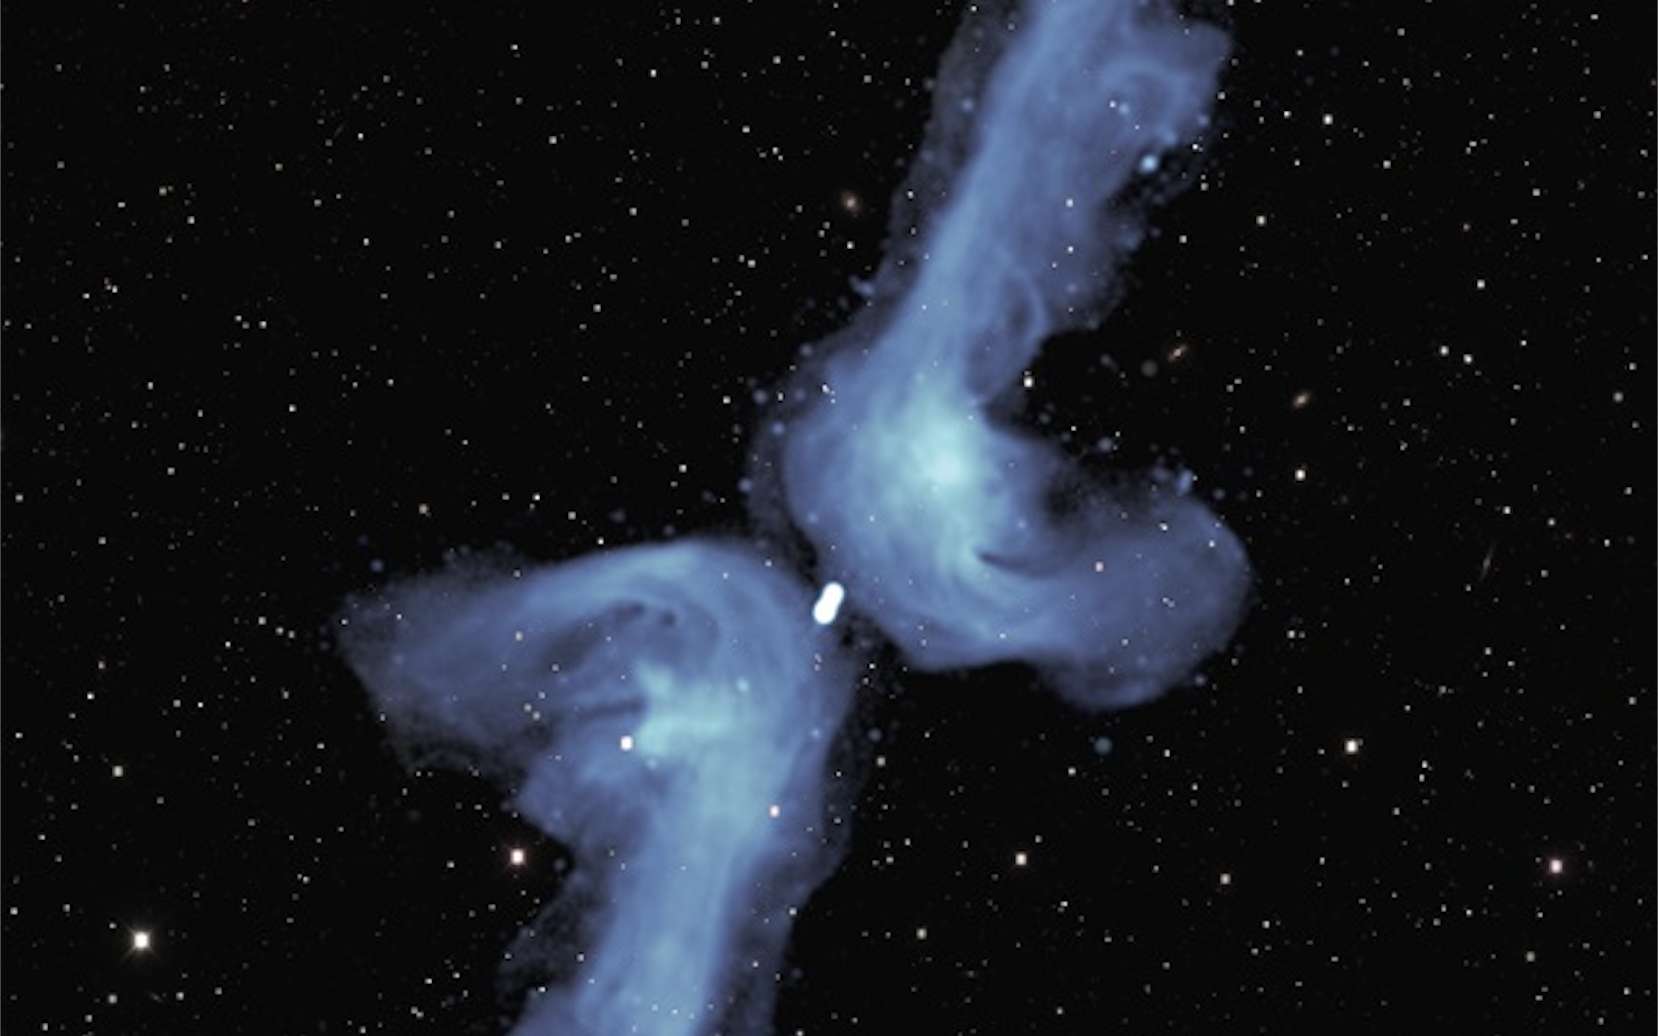 L'étrange galaxie PKS 2014-55 en forme de boomerang a des jets radio qui semblent courbes, plutôt que droits. © NRAO/AUI/NSF, Sarao, DES